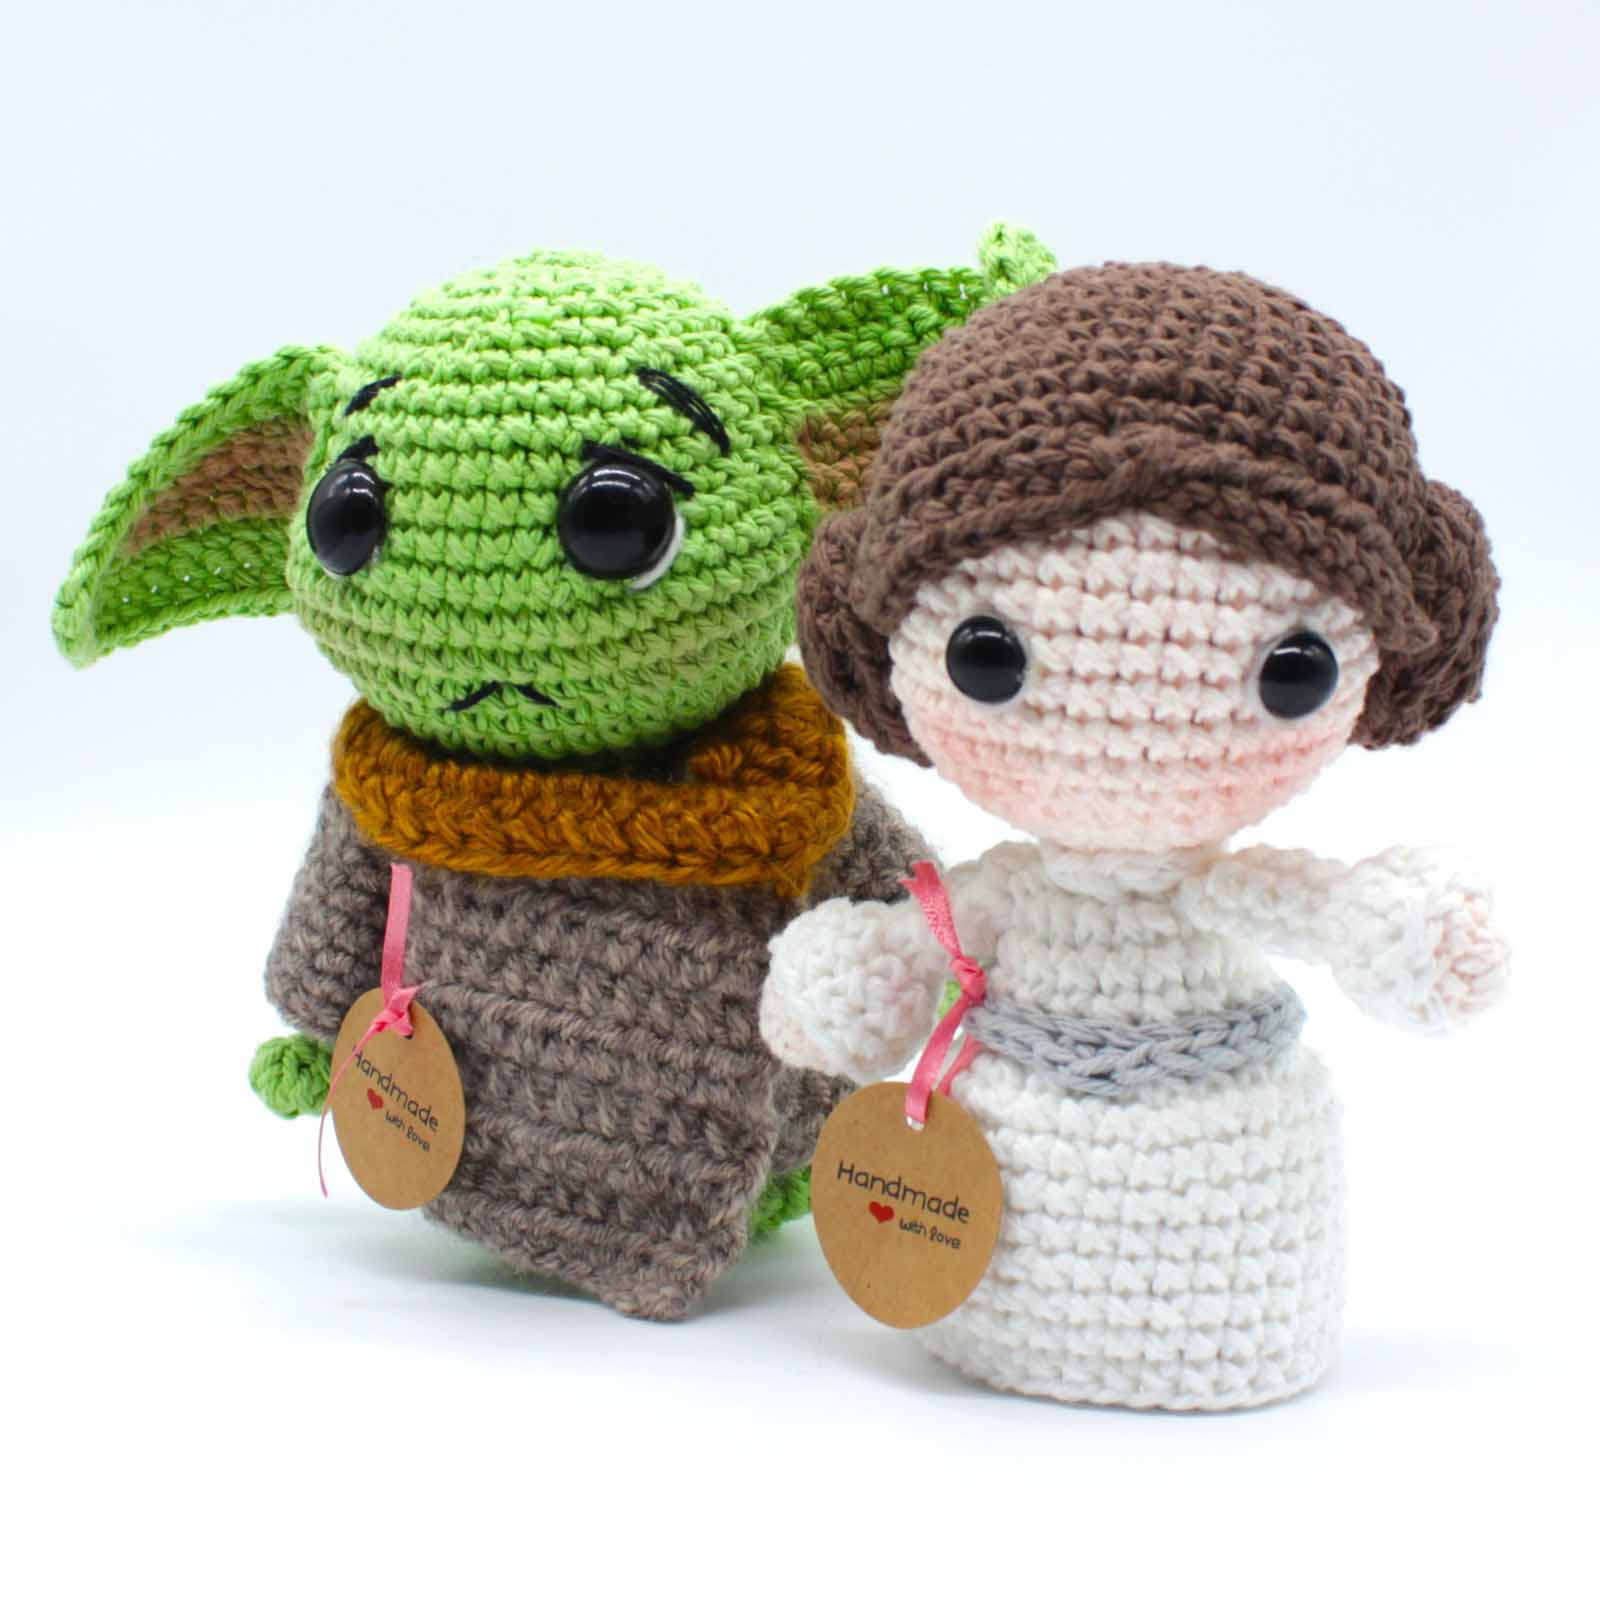 Princess Leia and baby Yoda amigurumis (Japanese crochet style).